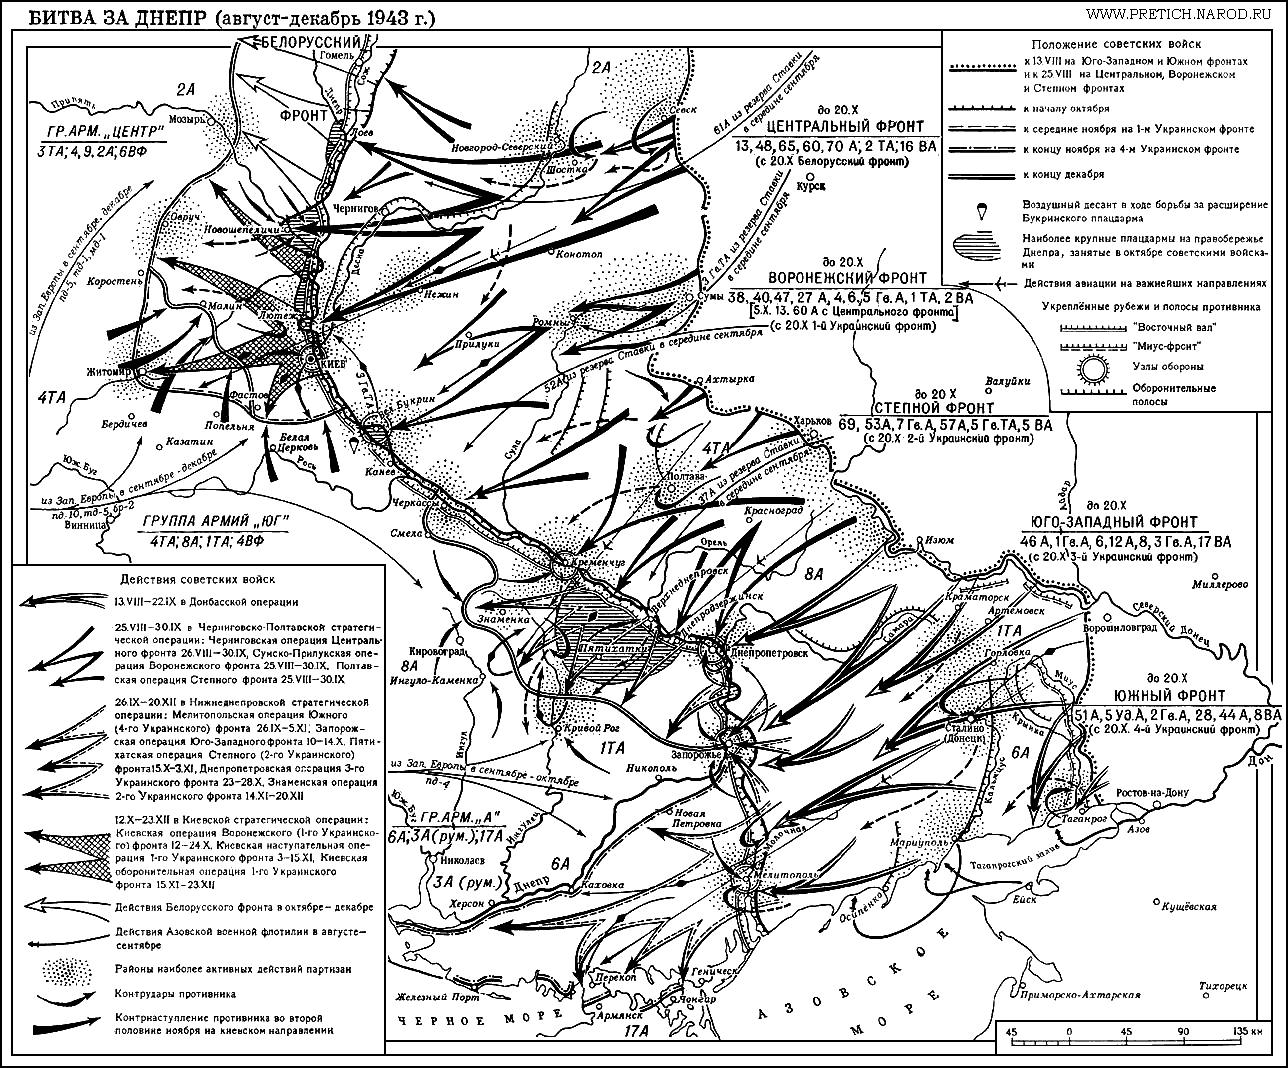 Карта - битва за Днепр, август-декабрь 1943 г.